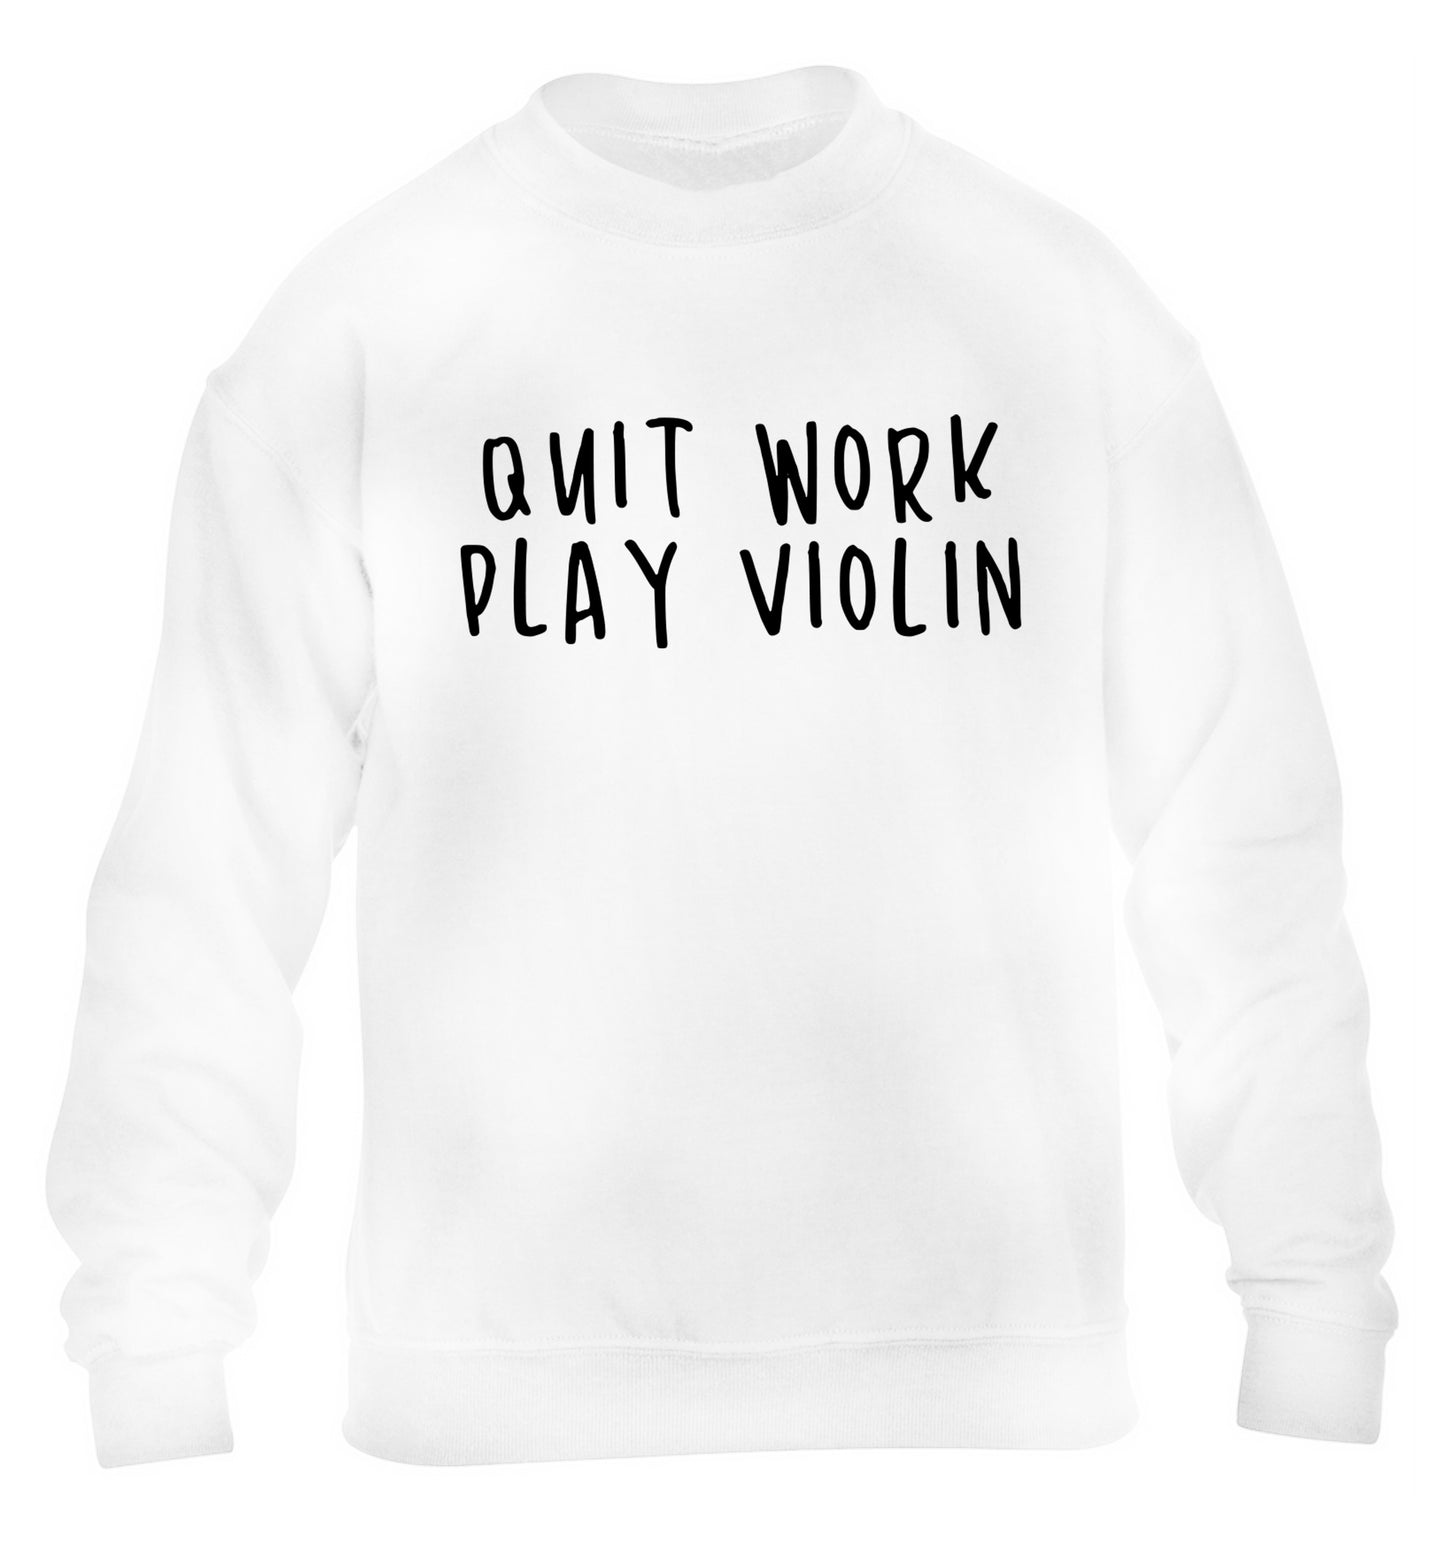 Quit work play violin children's white sweater 12-13 Years